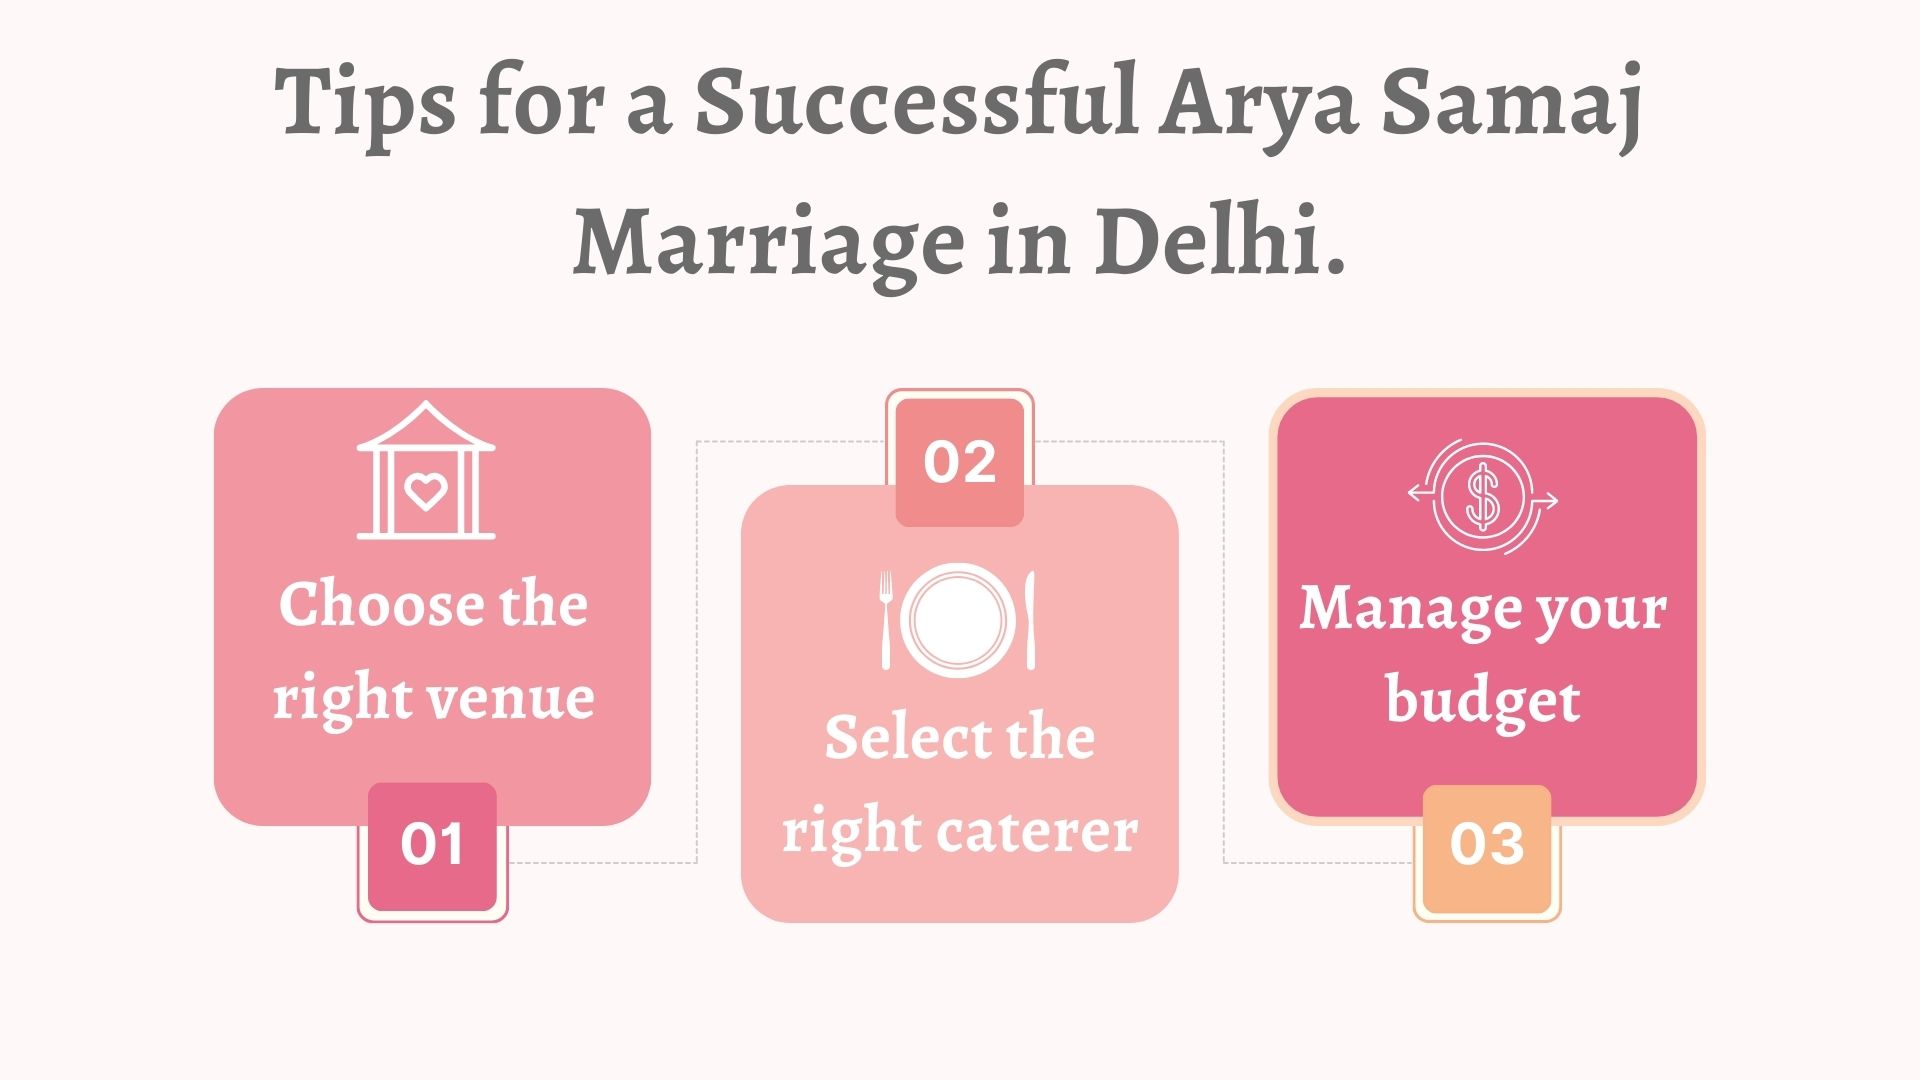 Tips for a Successful Arya Samaj Marriage in Delhi.